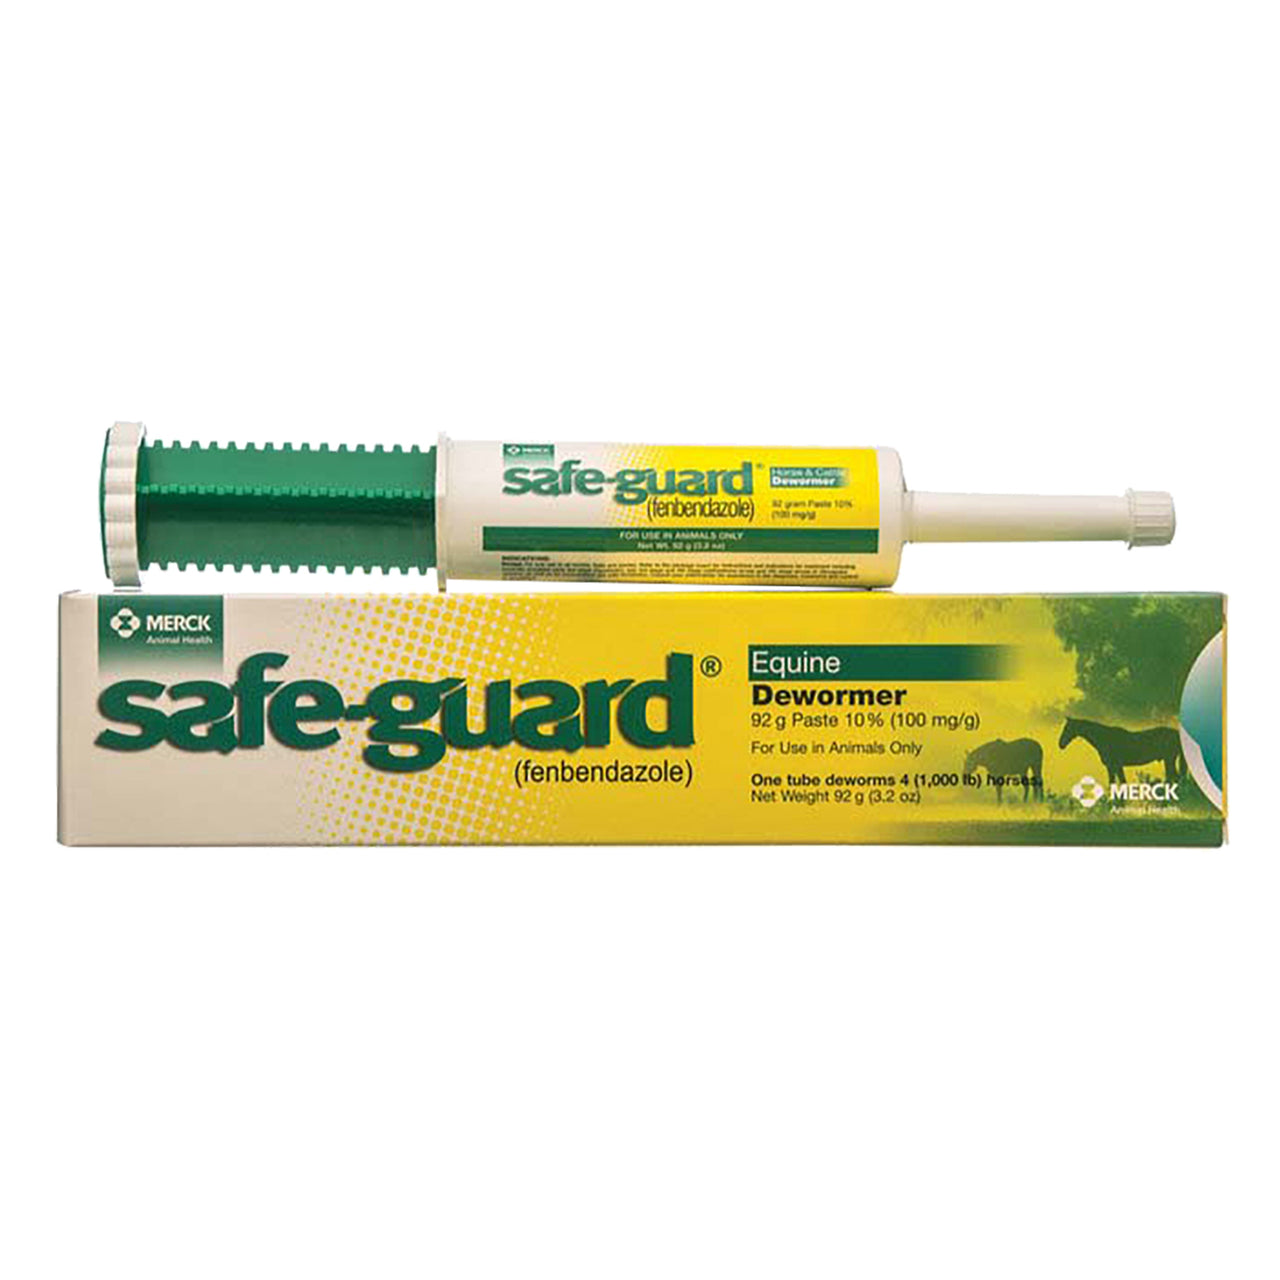 MERCK Safe-Guard paste 25g syringe 10% fenbendazole